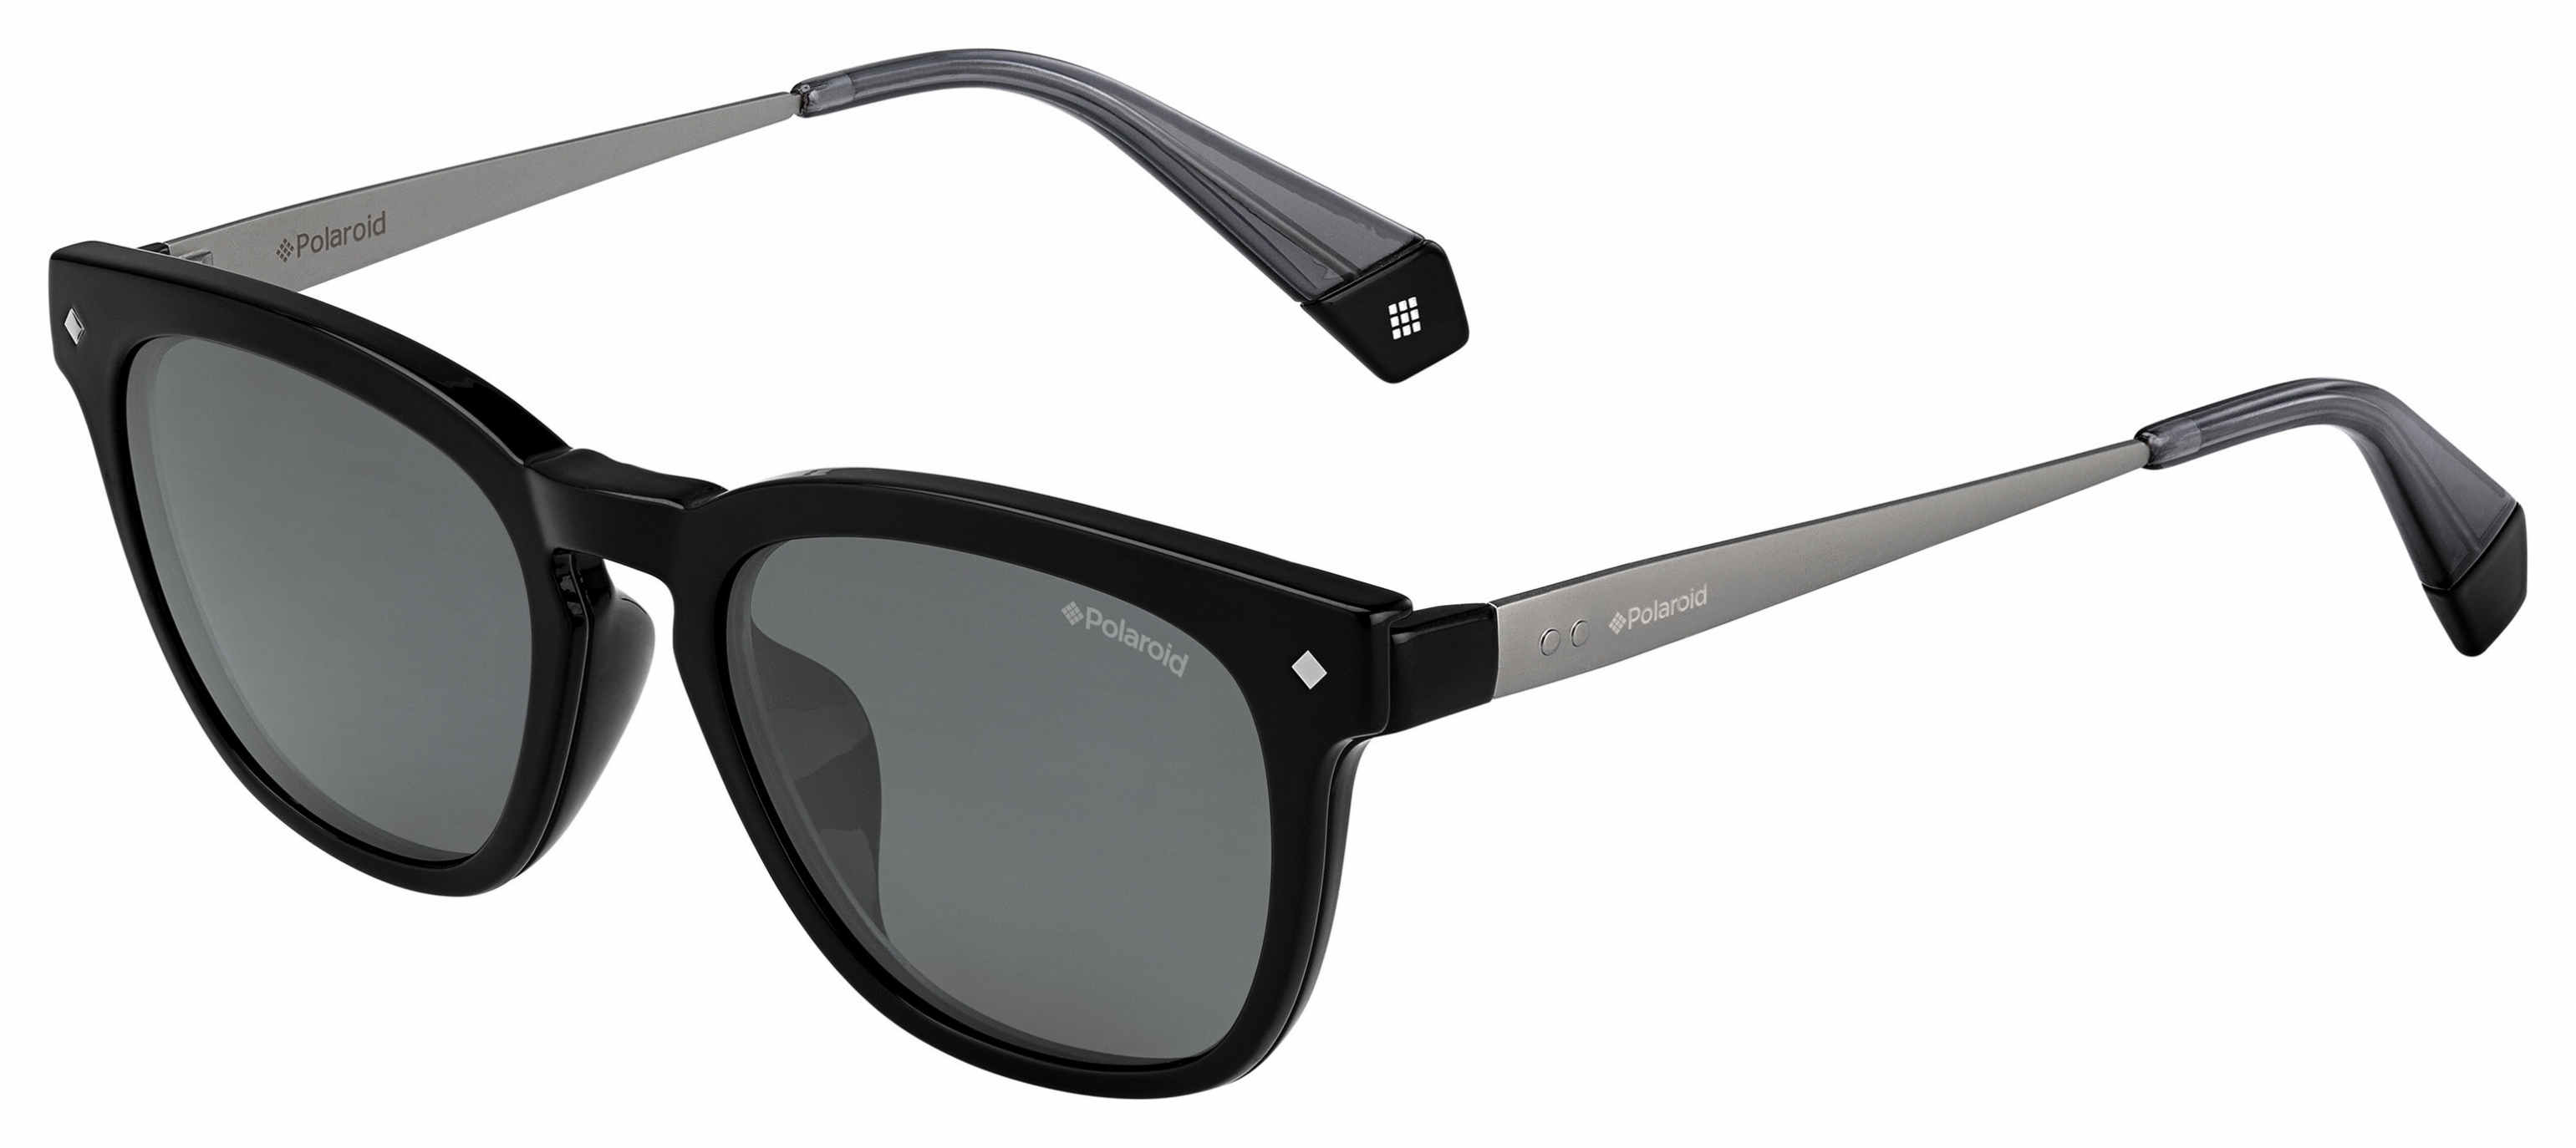 Buy Polaroid Sunglasses directly from OpticsFast.com